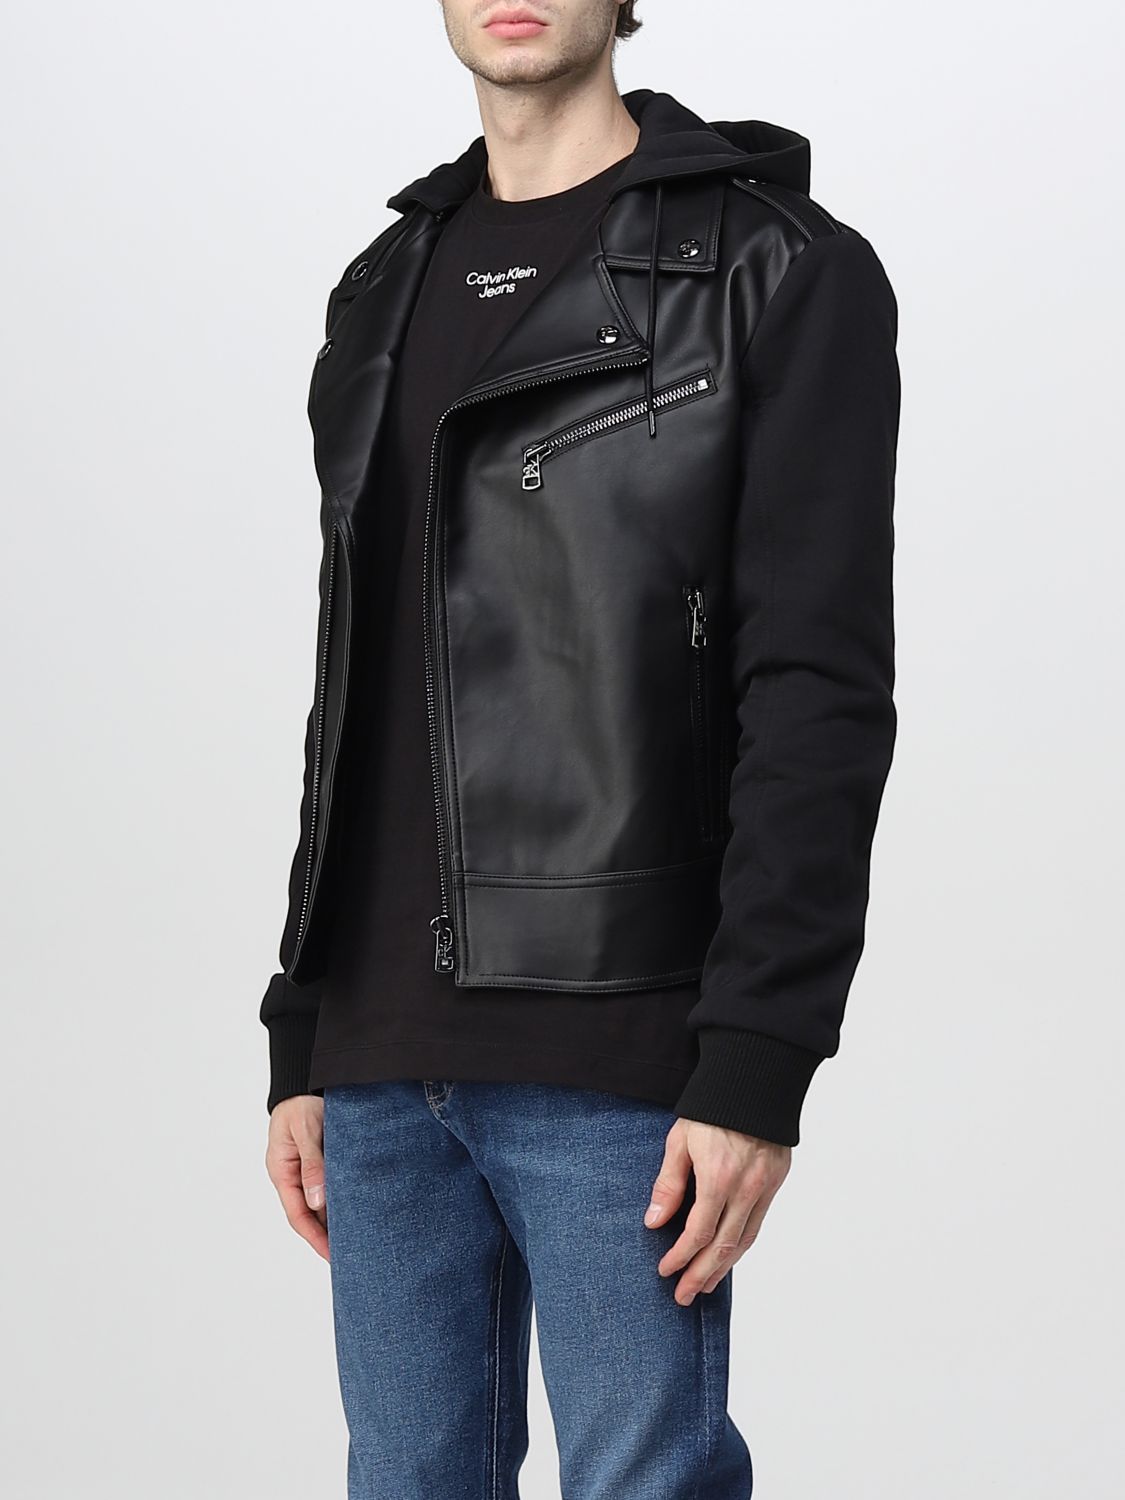 CALVIN KLEIN JEANS: jacket for man - Black | Calvin Klein Jeans jacket ...